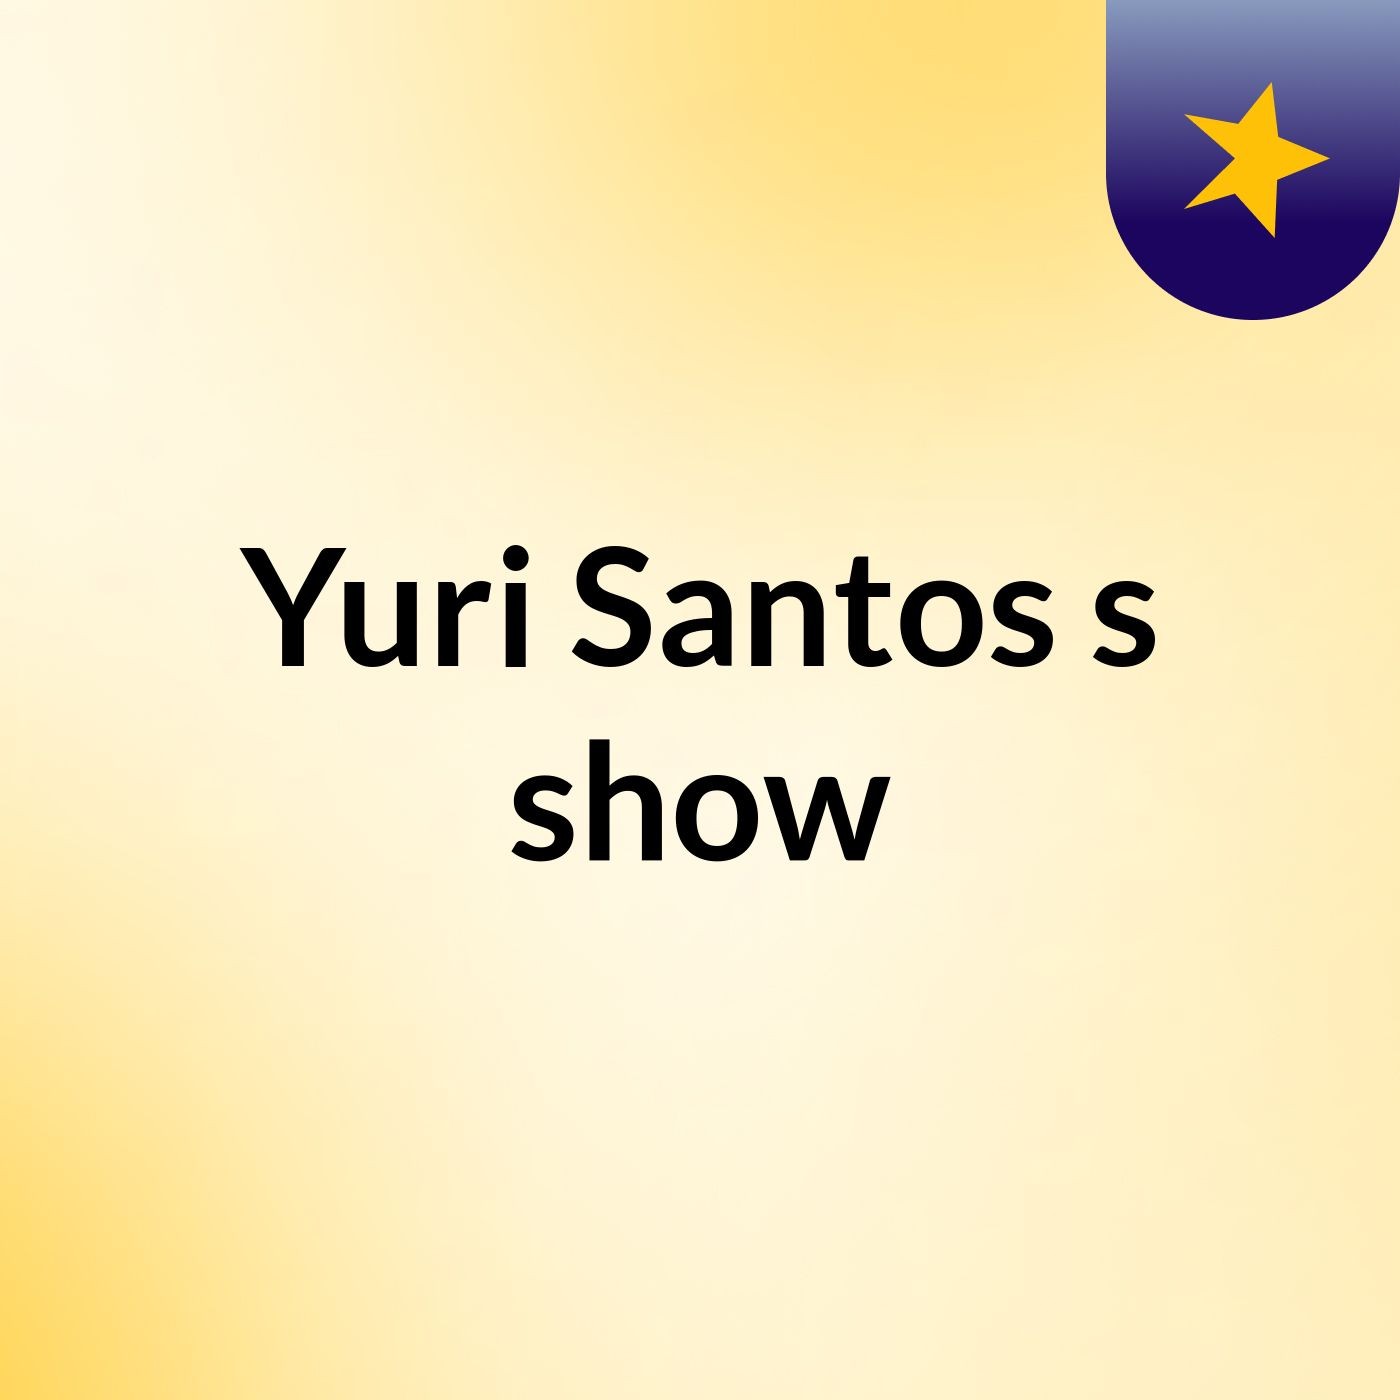 Yuri Santos's show